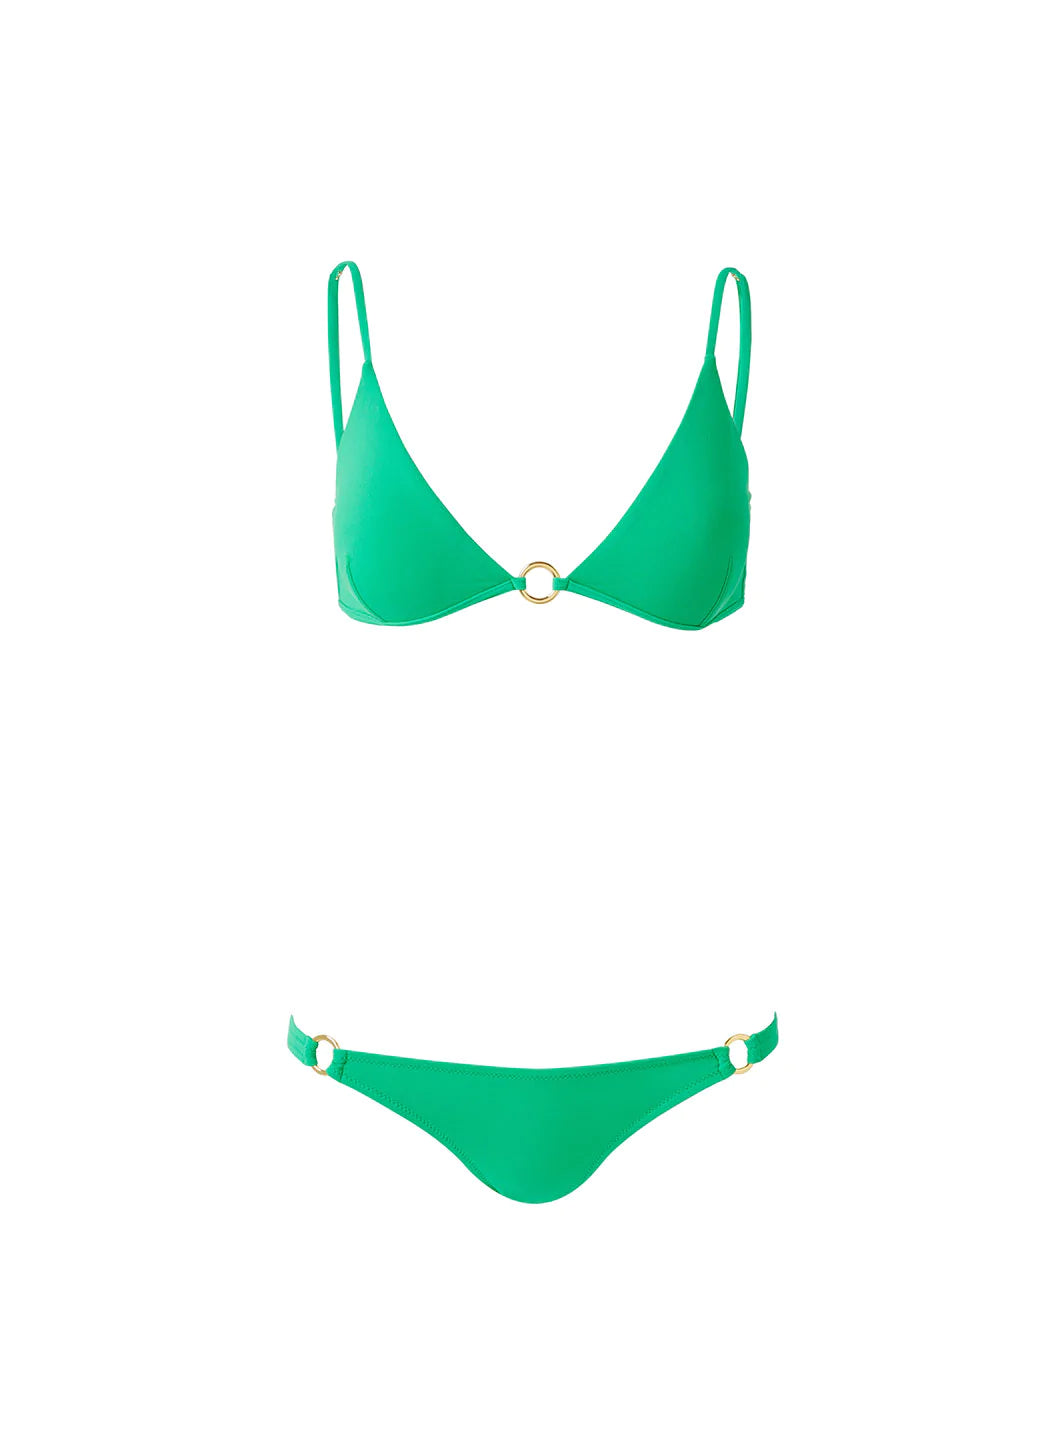 Lounge Underwear - Green Antigua Triangle bikini set on Designer